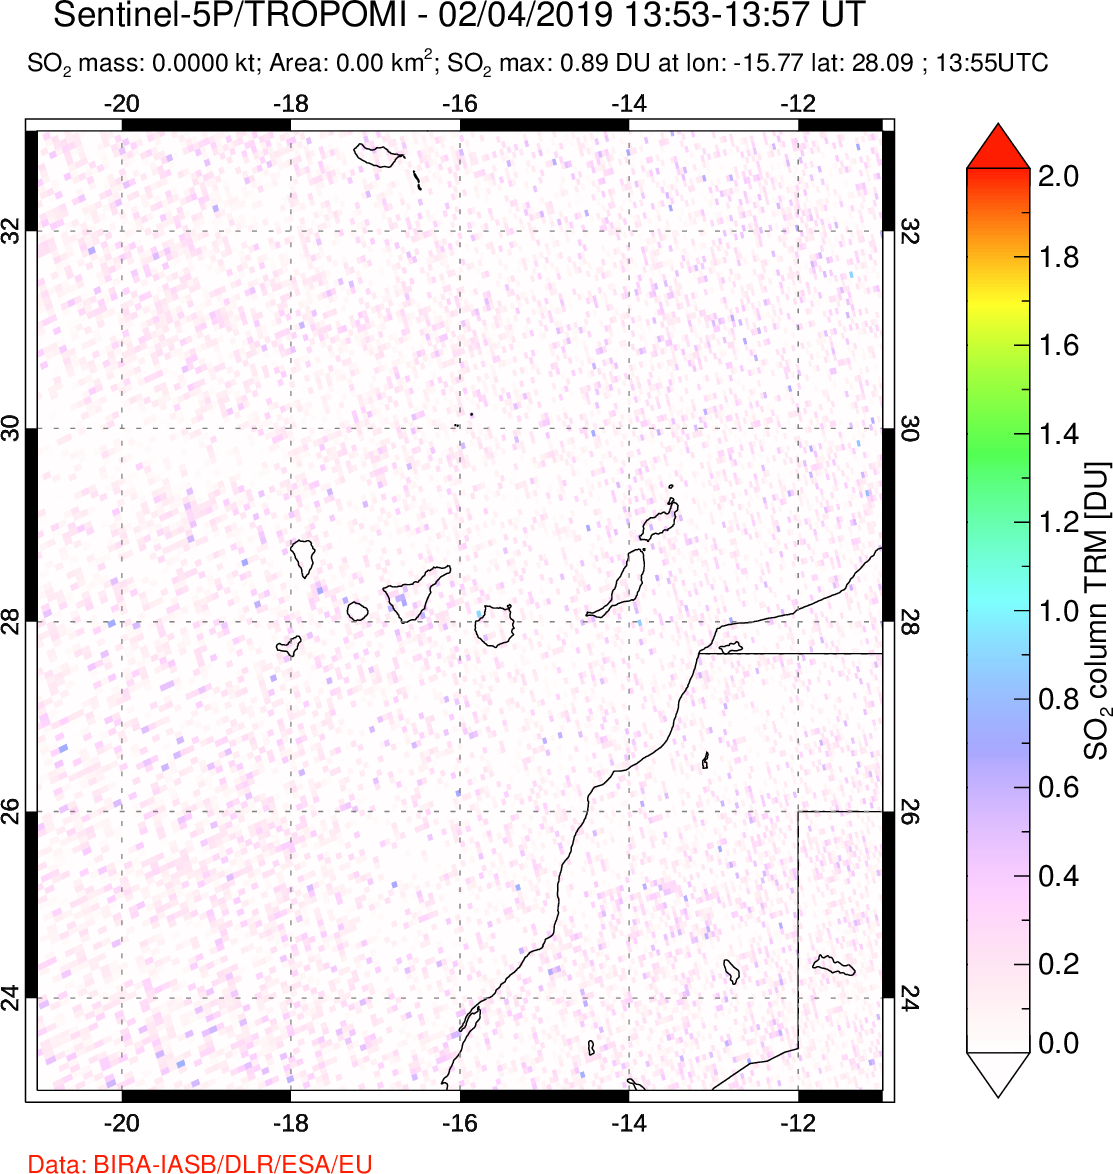 A sulfur dioxide image over Canary Islands on Feb 04, 2019.